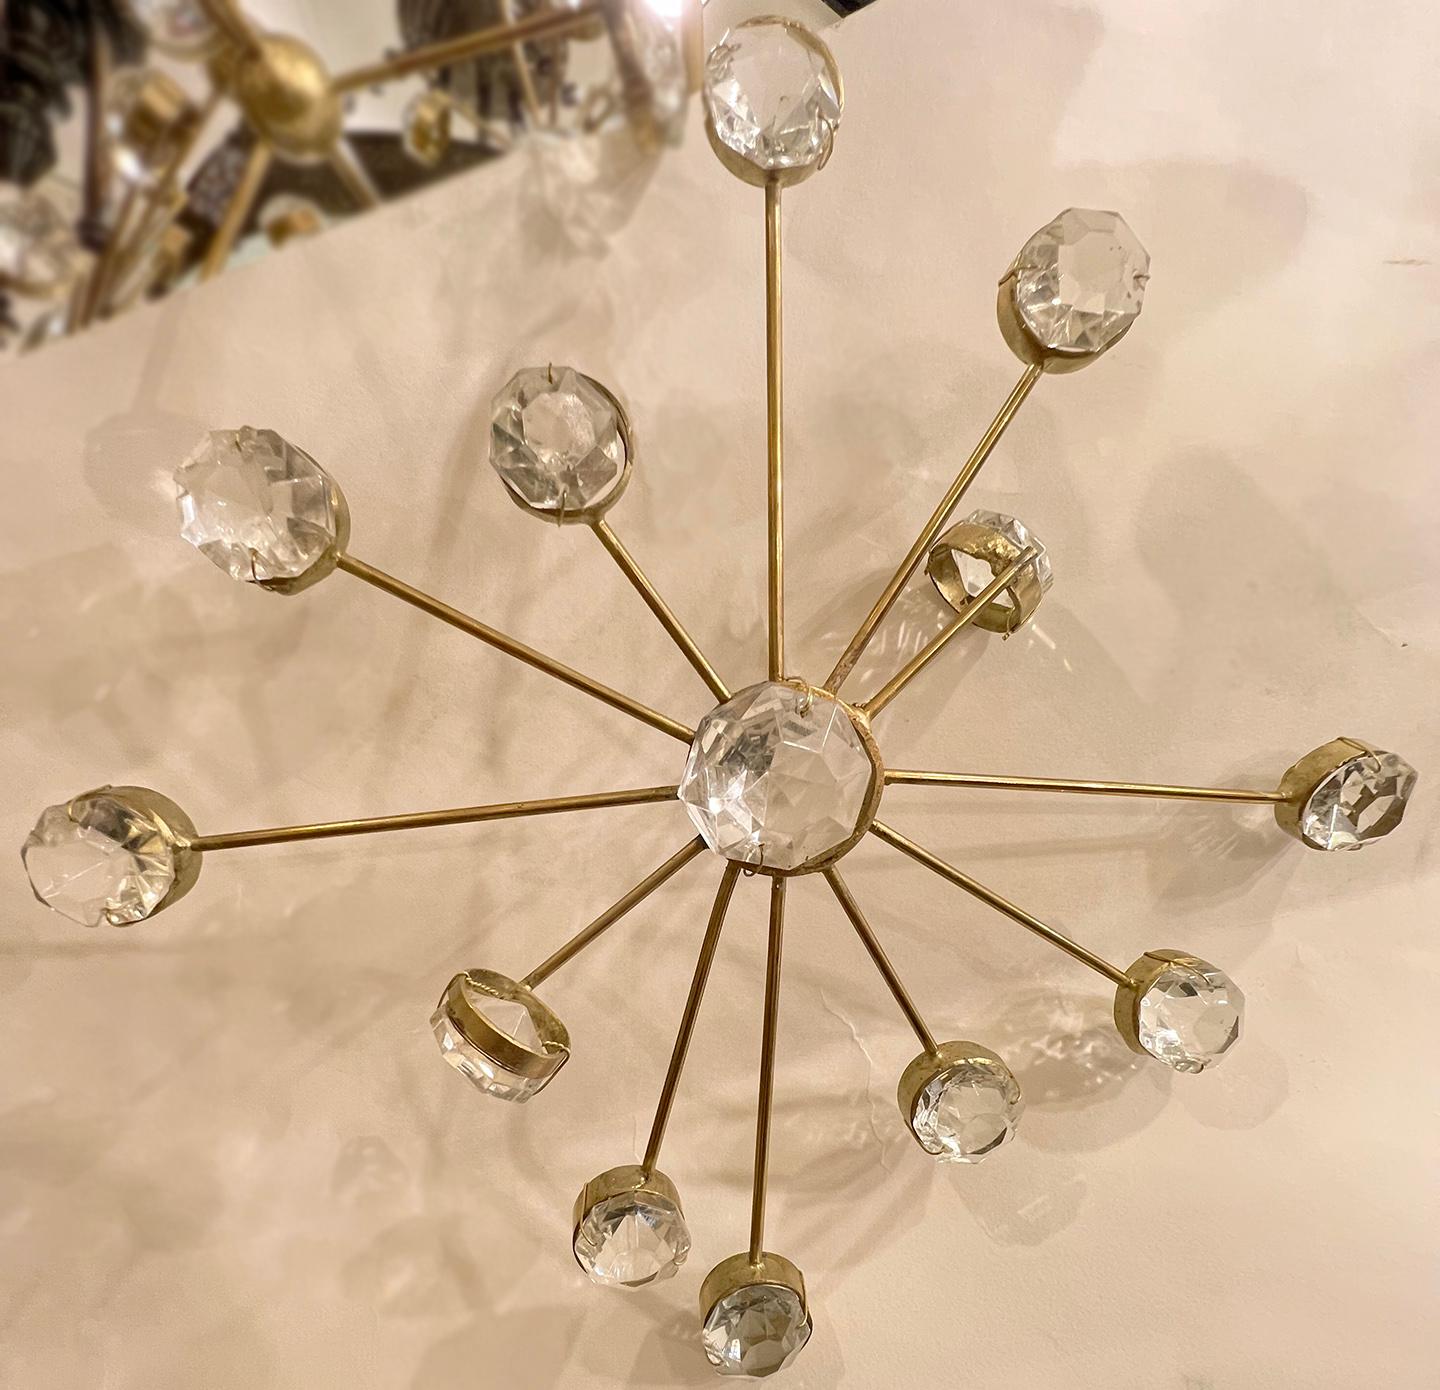 A circa 1960's French gilt metal sputnik chandelier fixture with six chandelier lights.

Measurements:
Diameter: 32